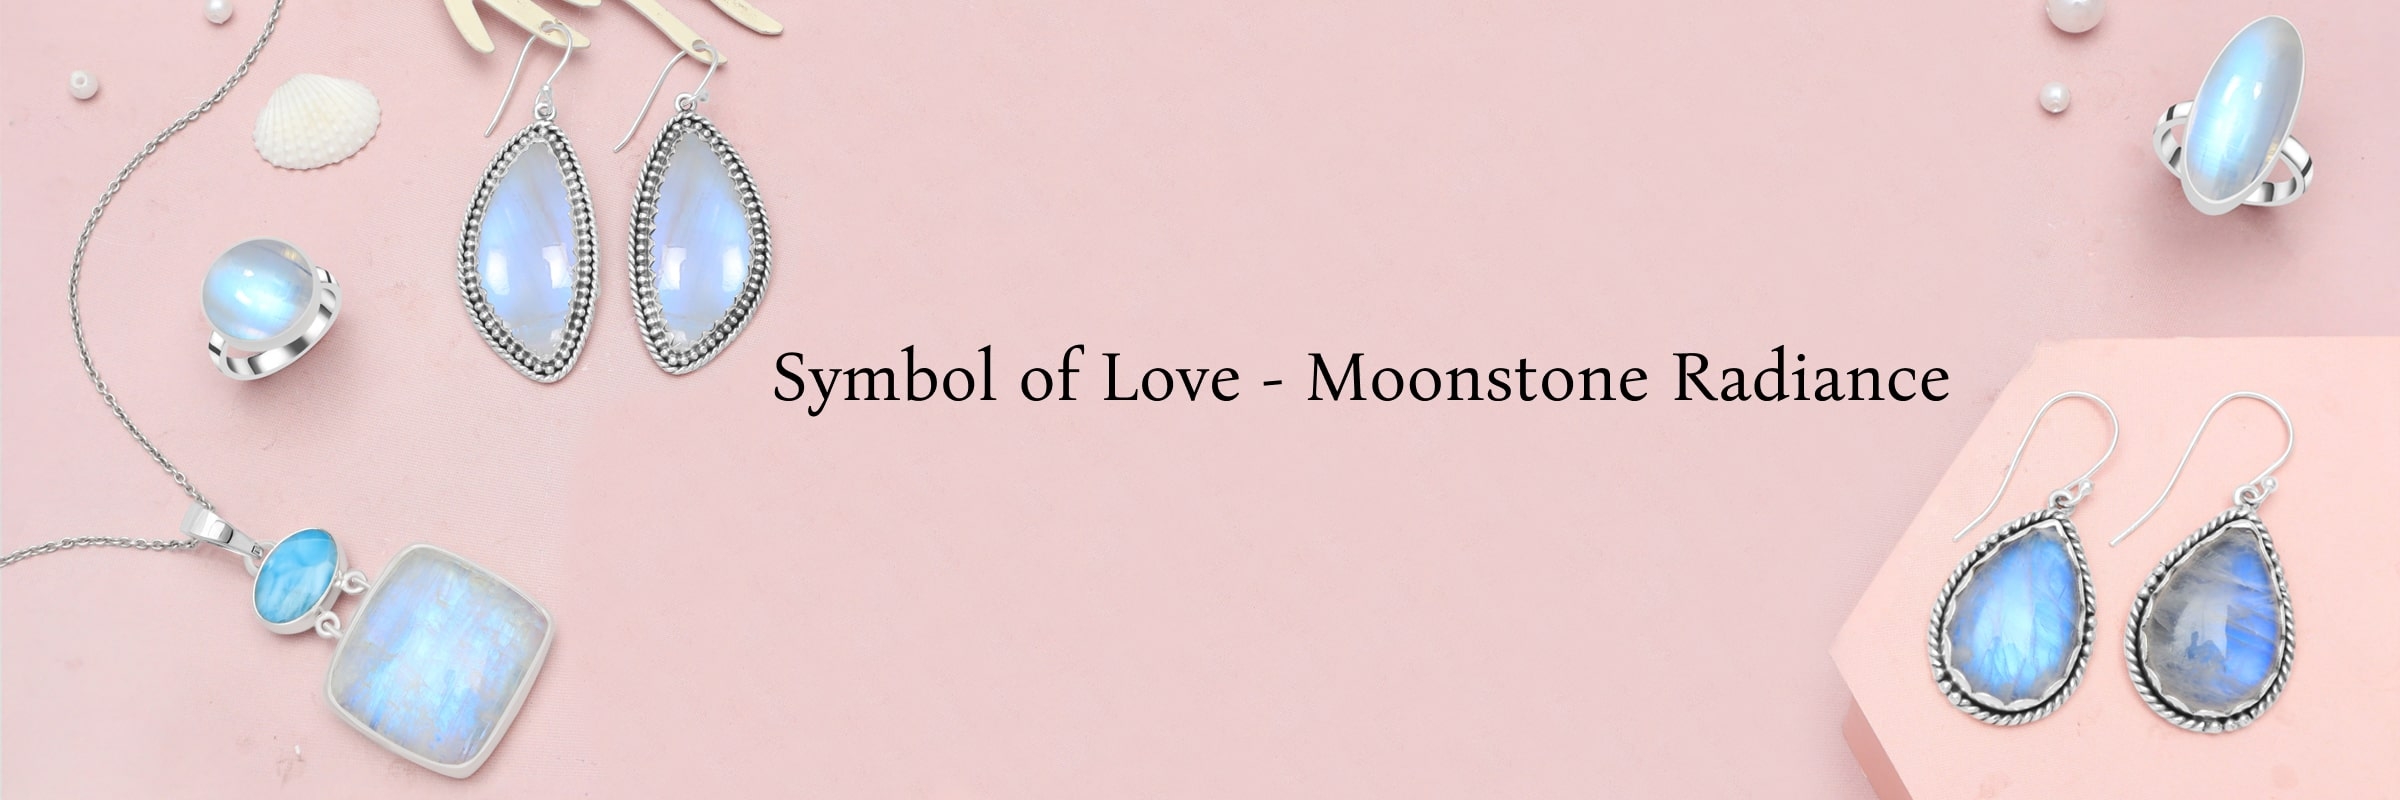 A Symbol of Love